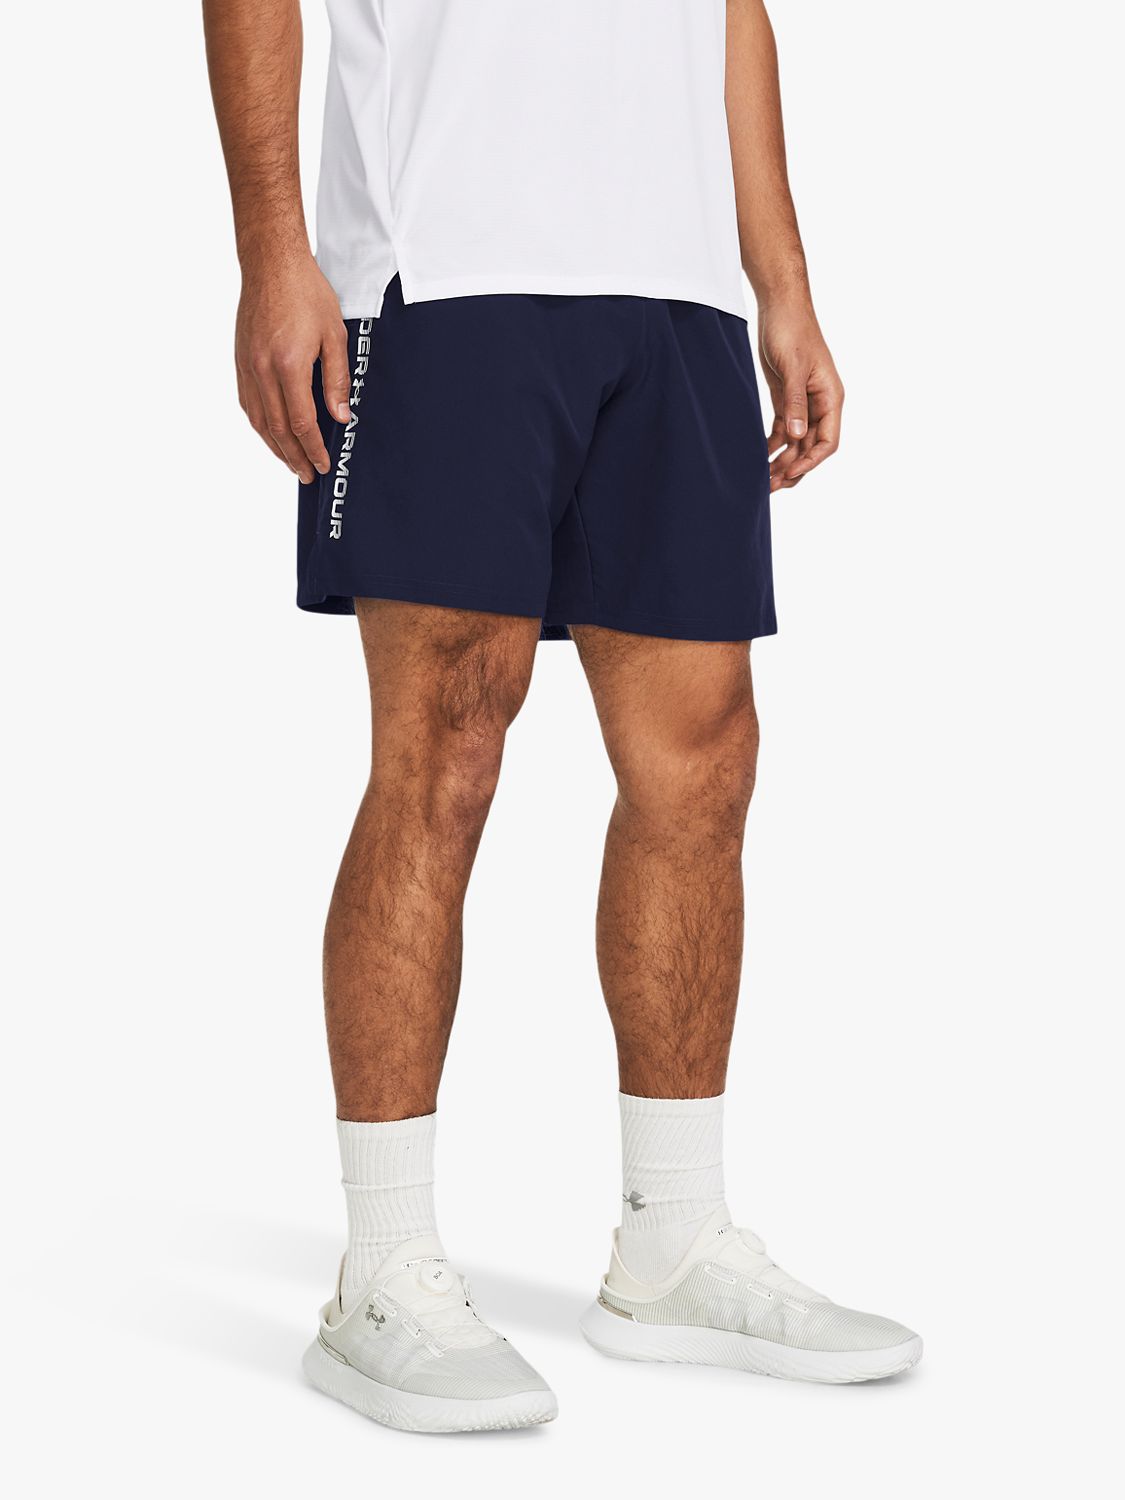 Under Armour Lightweight Woven Shorts, Navy/White, M